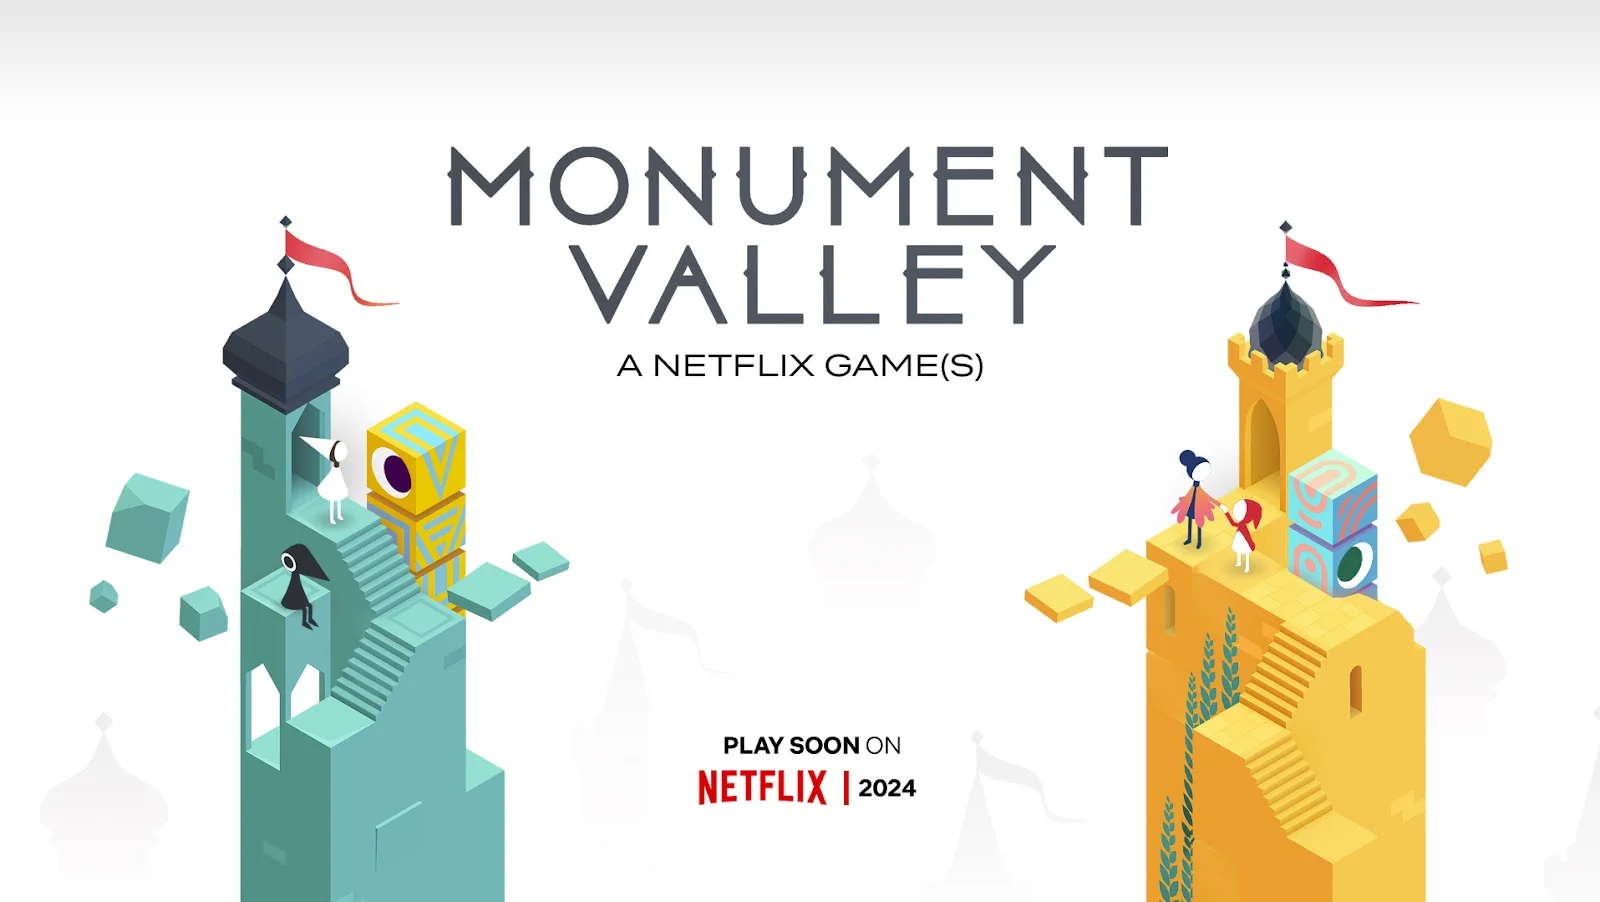 Netflix Monument Valley